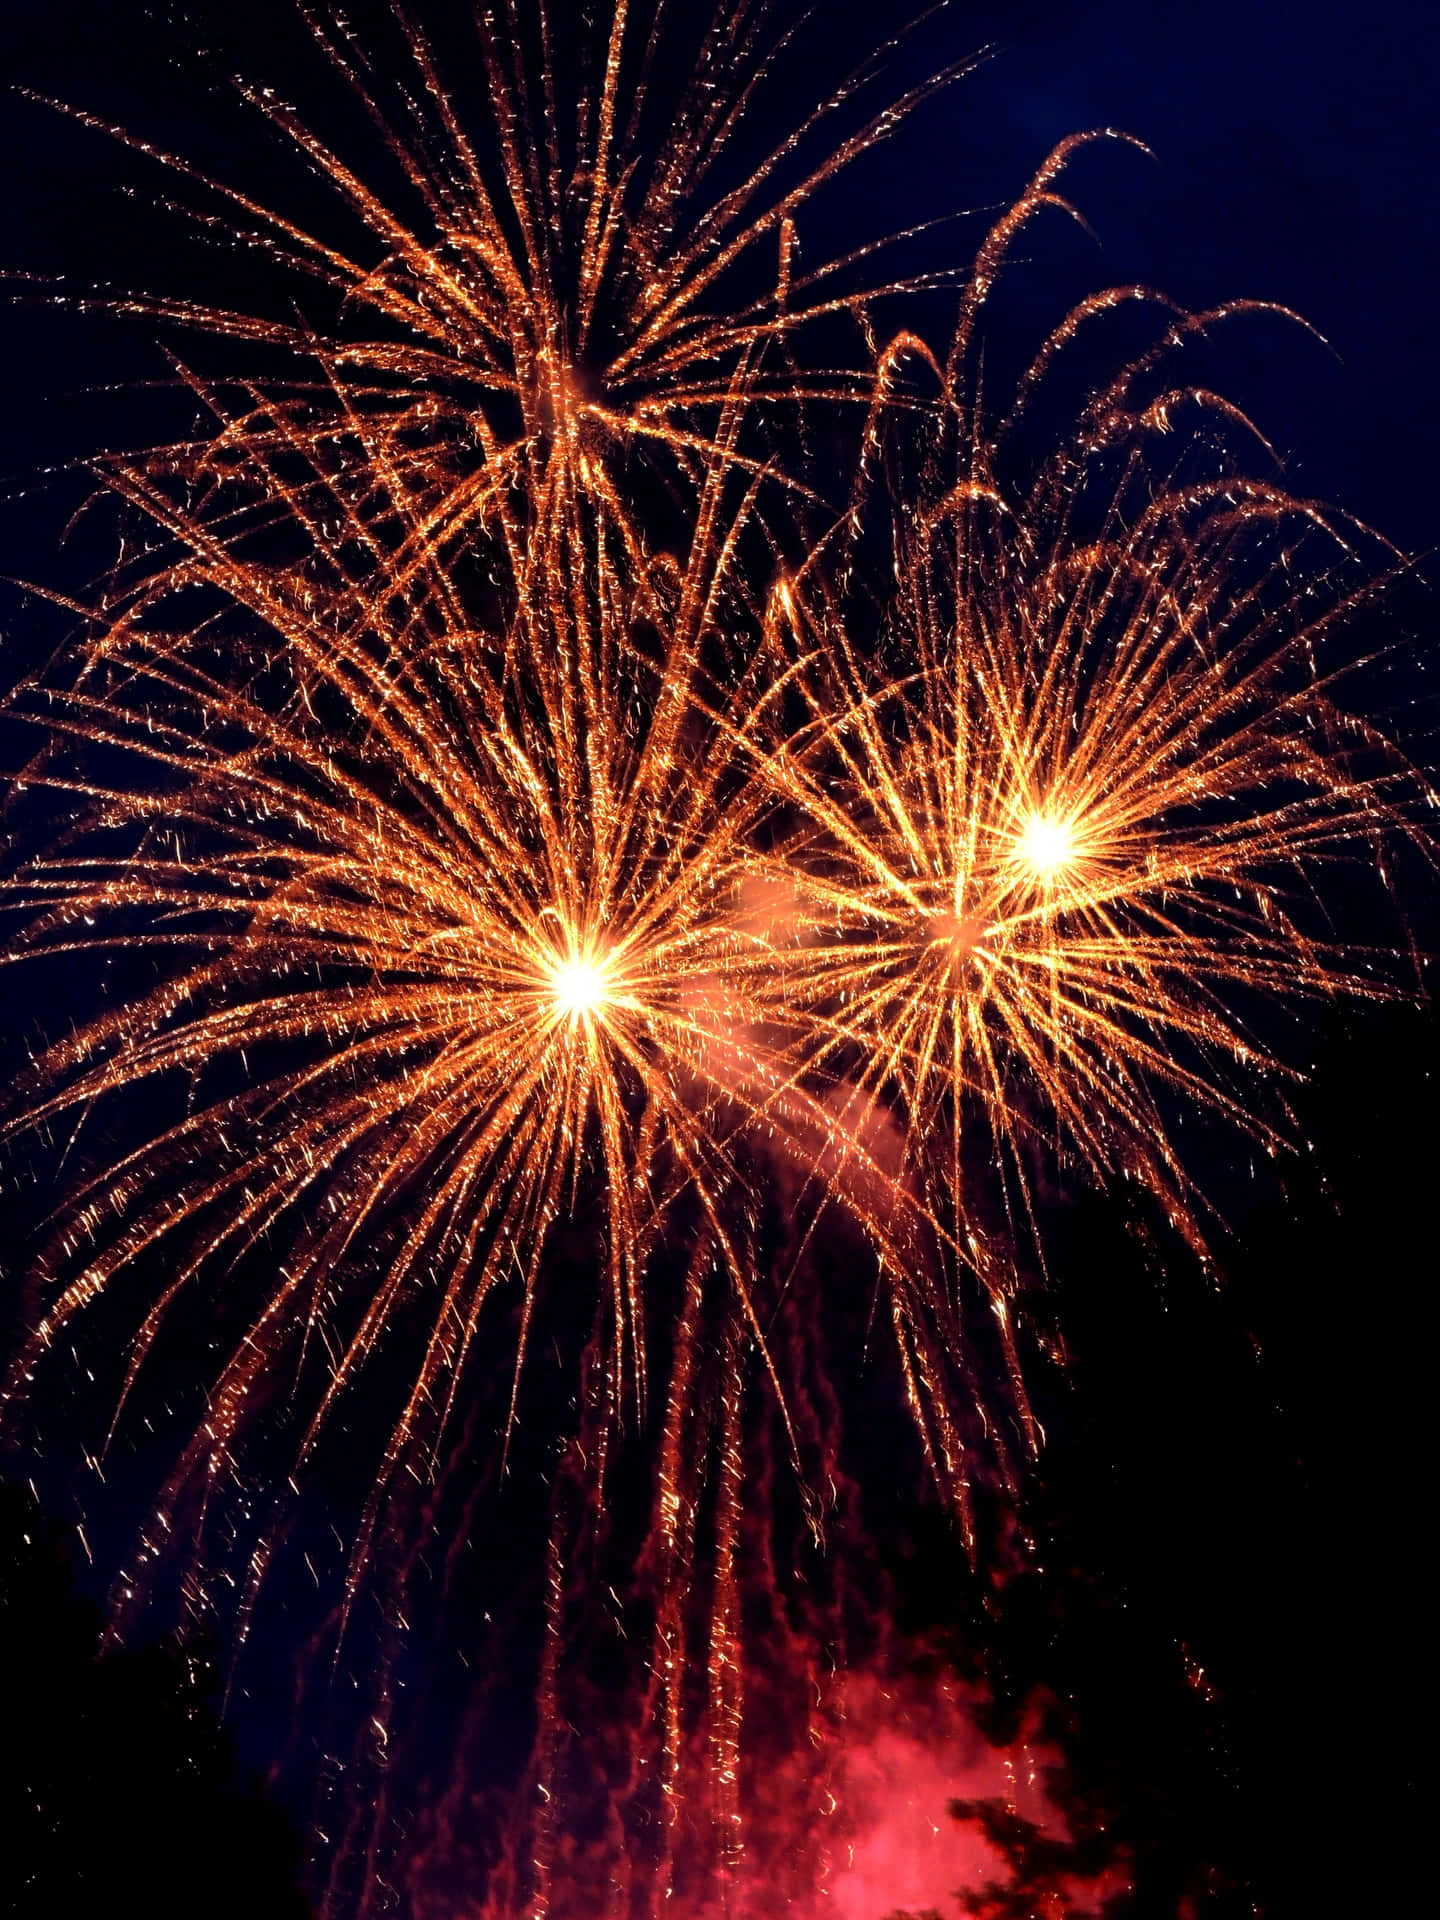 A vivid display of fireworks lighting up the night sky